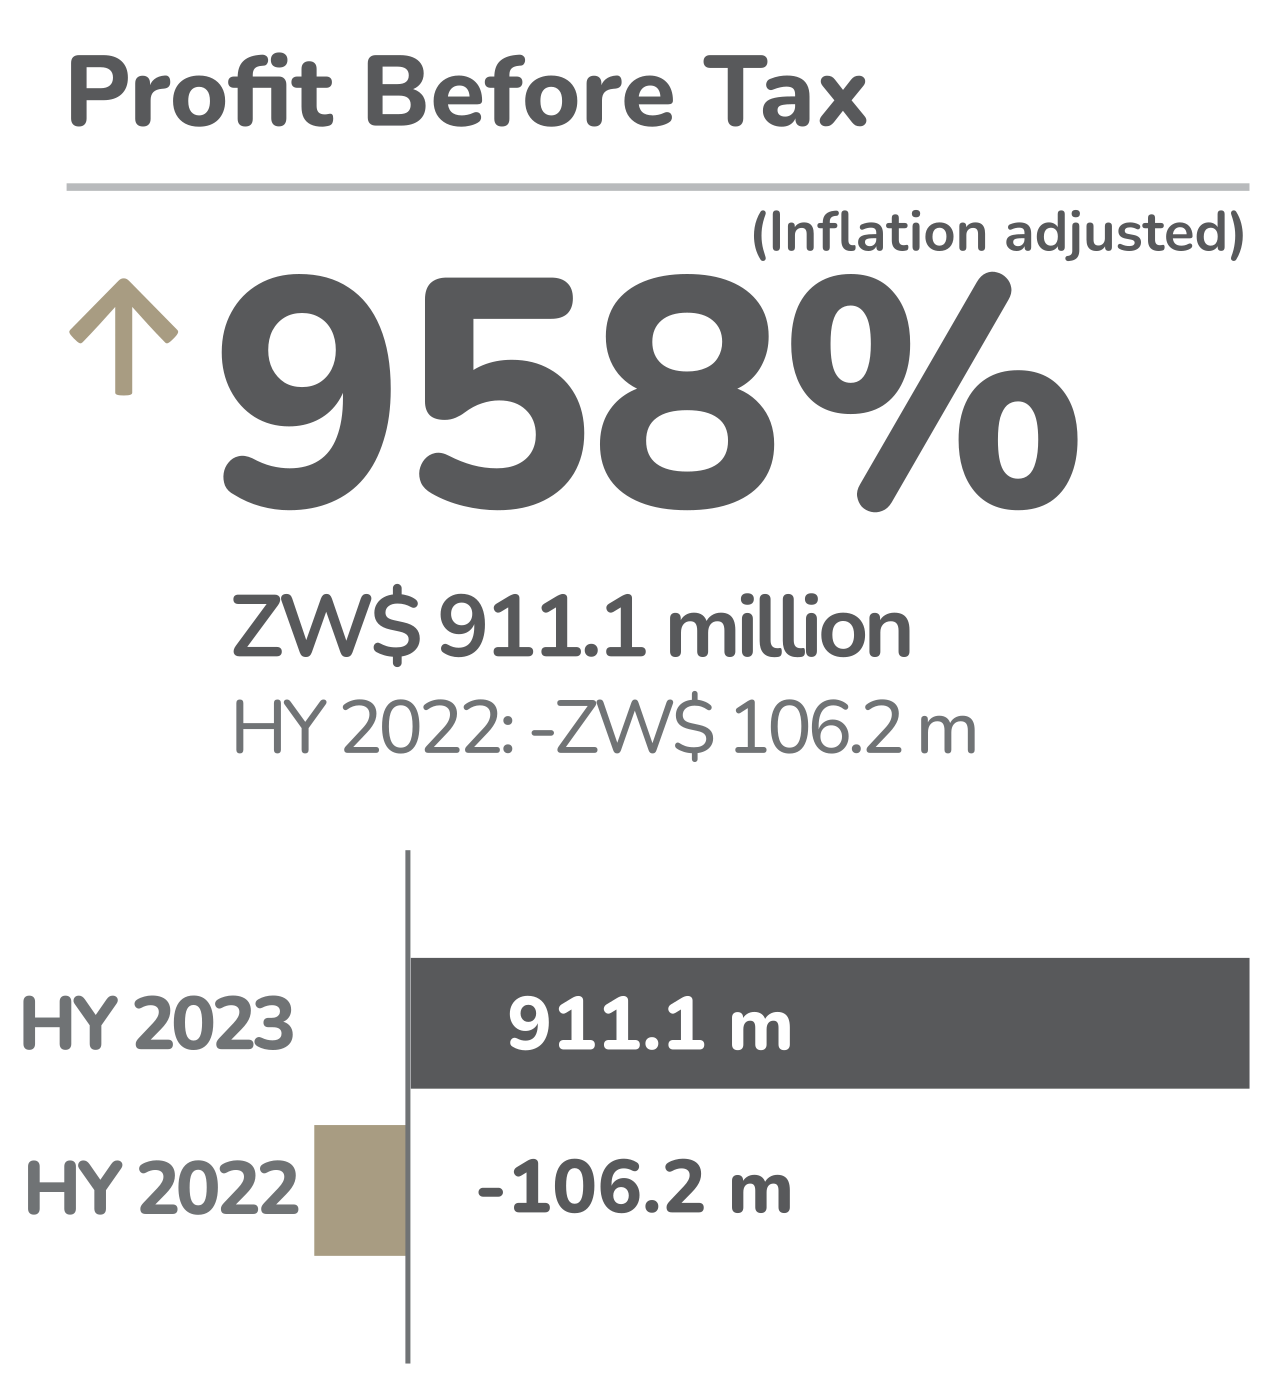 EcoCash HY2023 Profit before tax: Up 958%